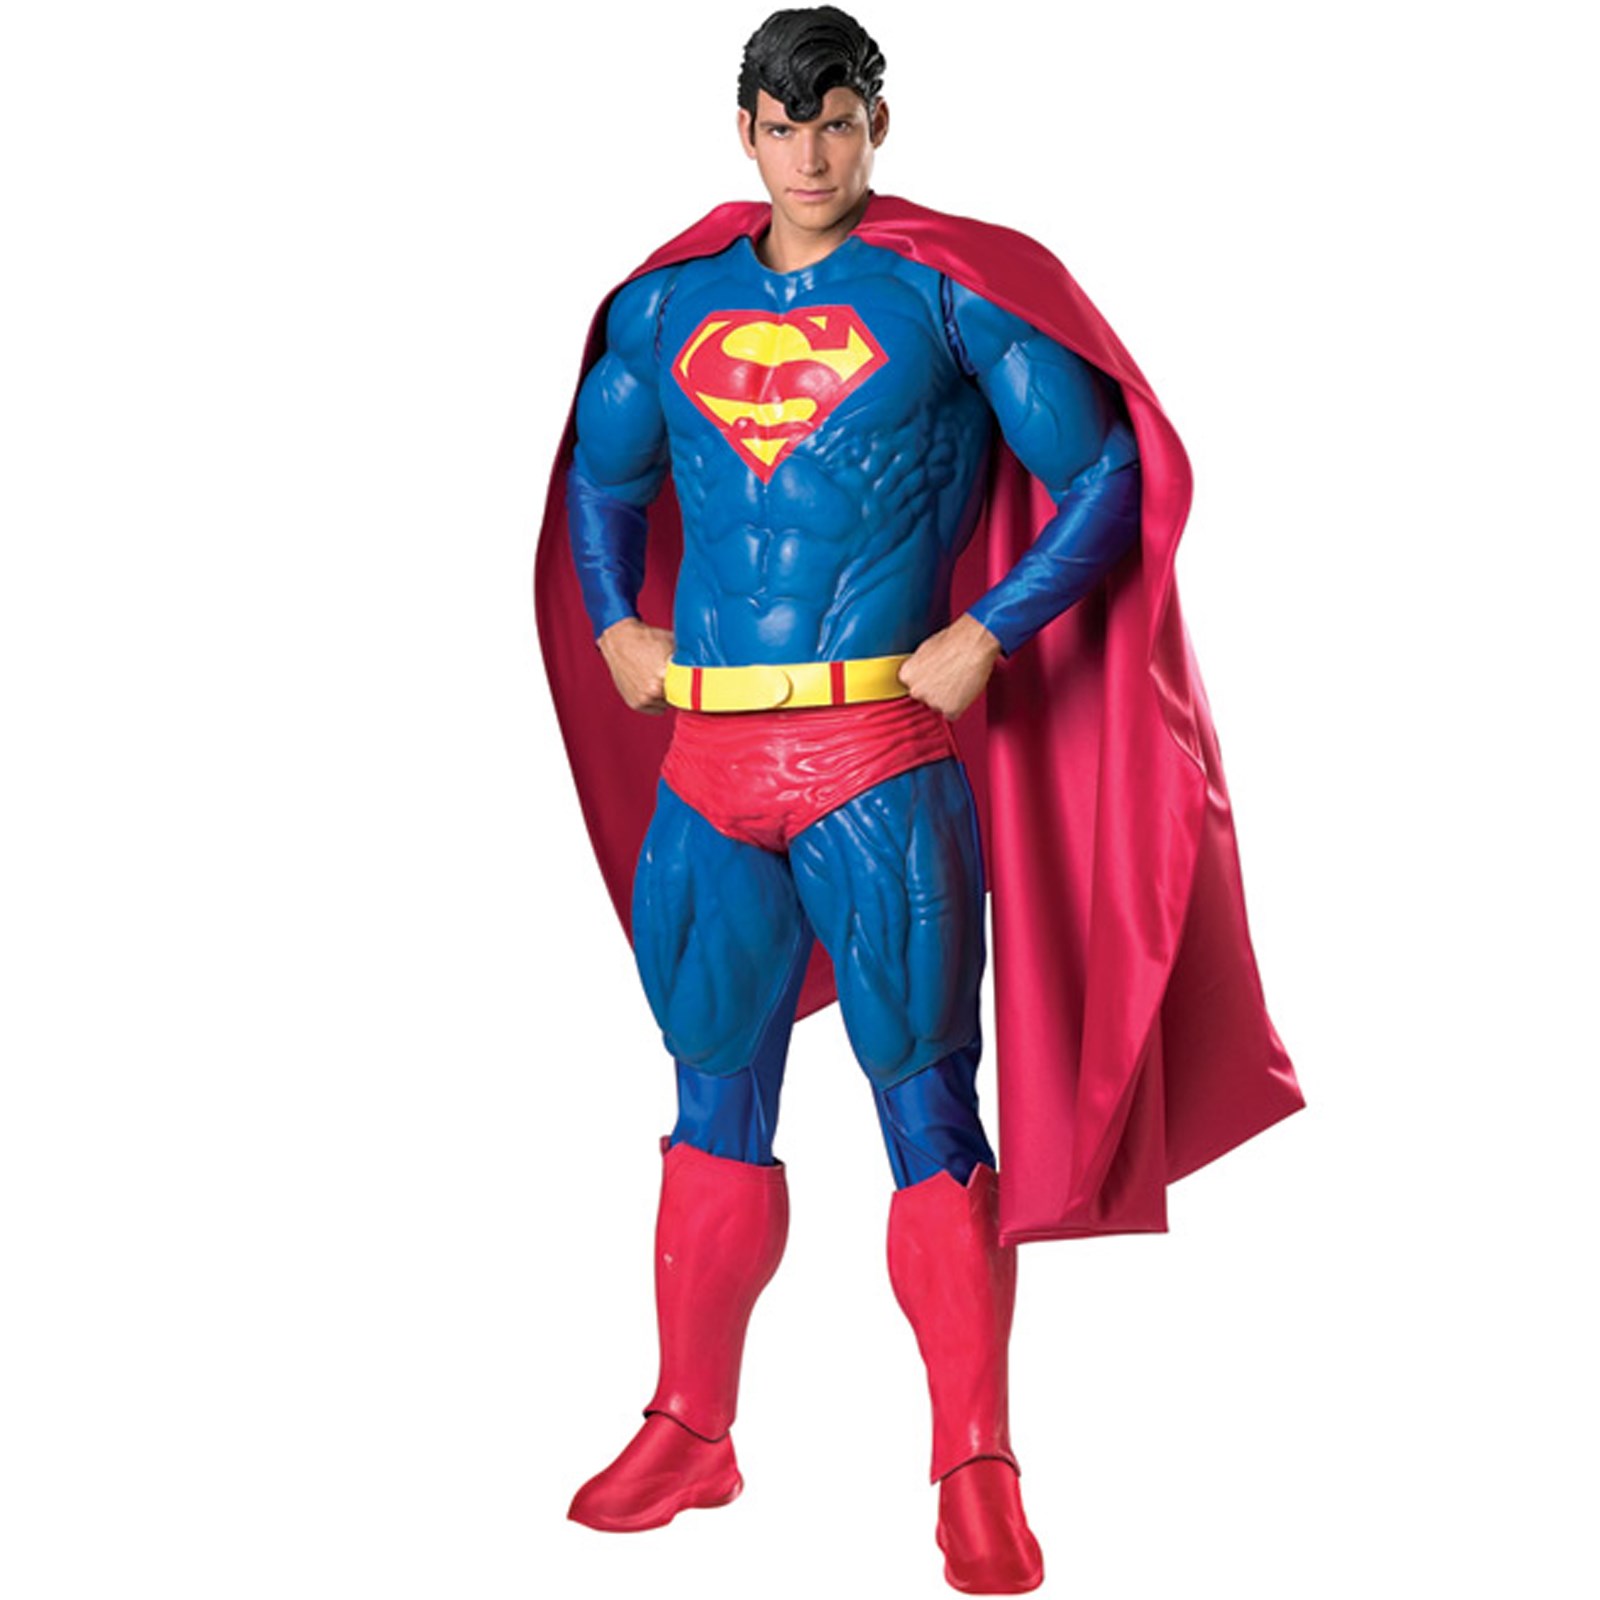 Collectors Edition Superman Adult Costume